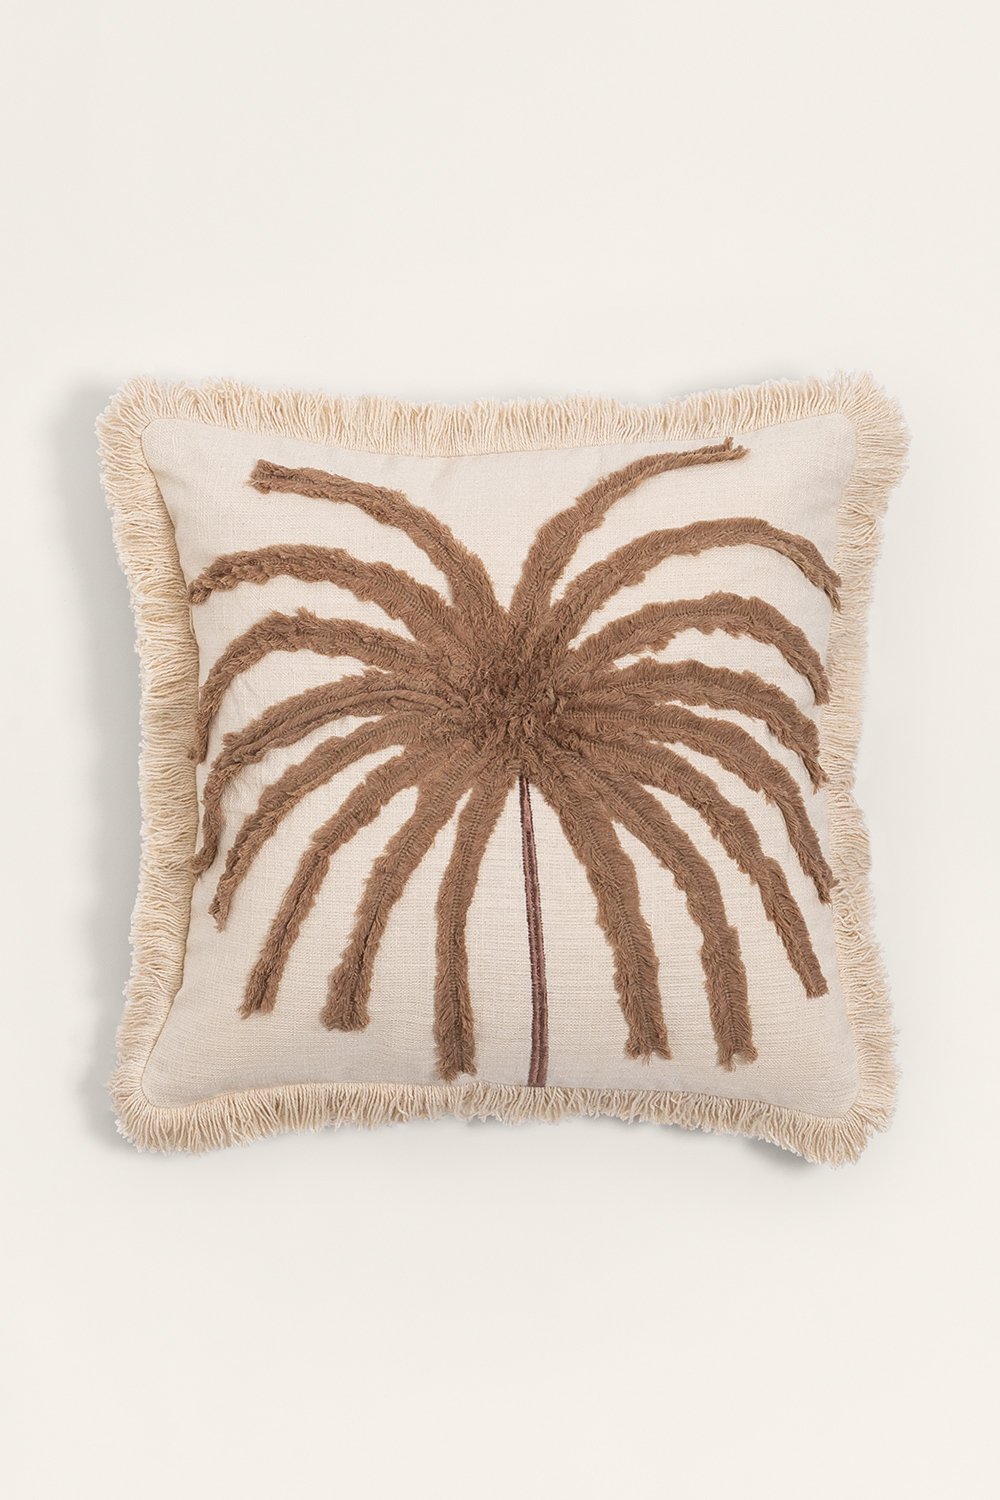 Square Cotton Cushion (45x45 cm) Korumba, gallery image 1